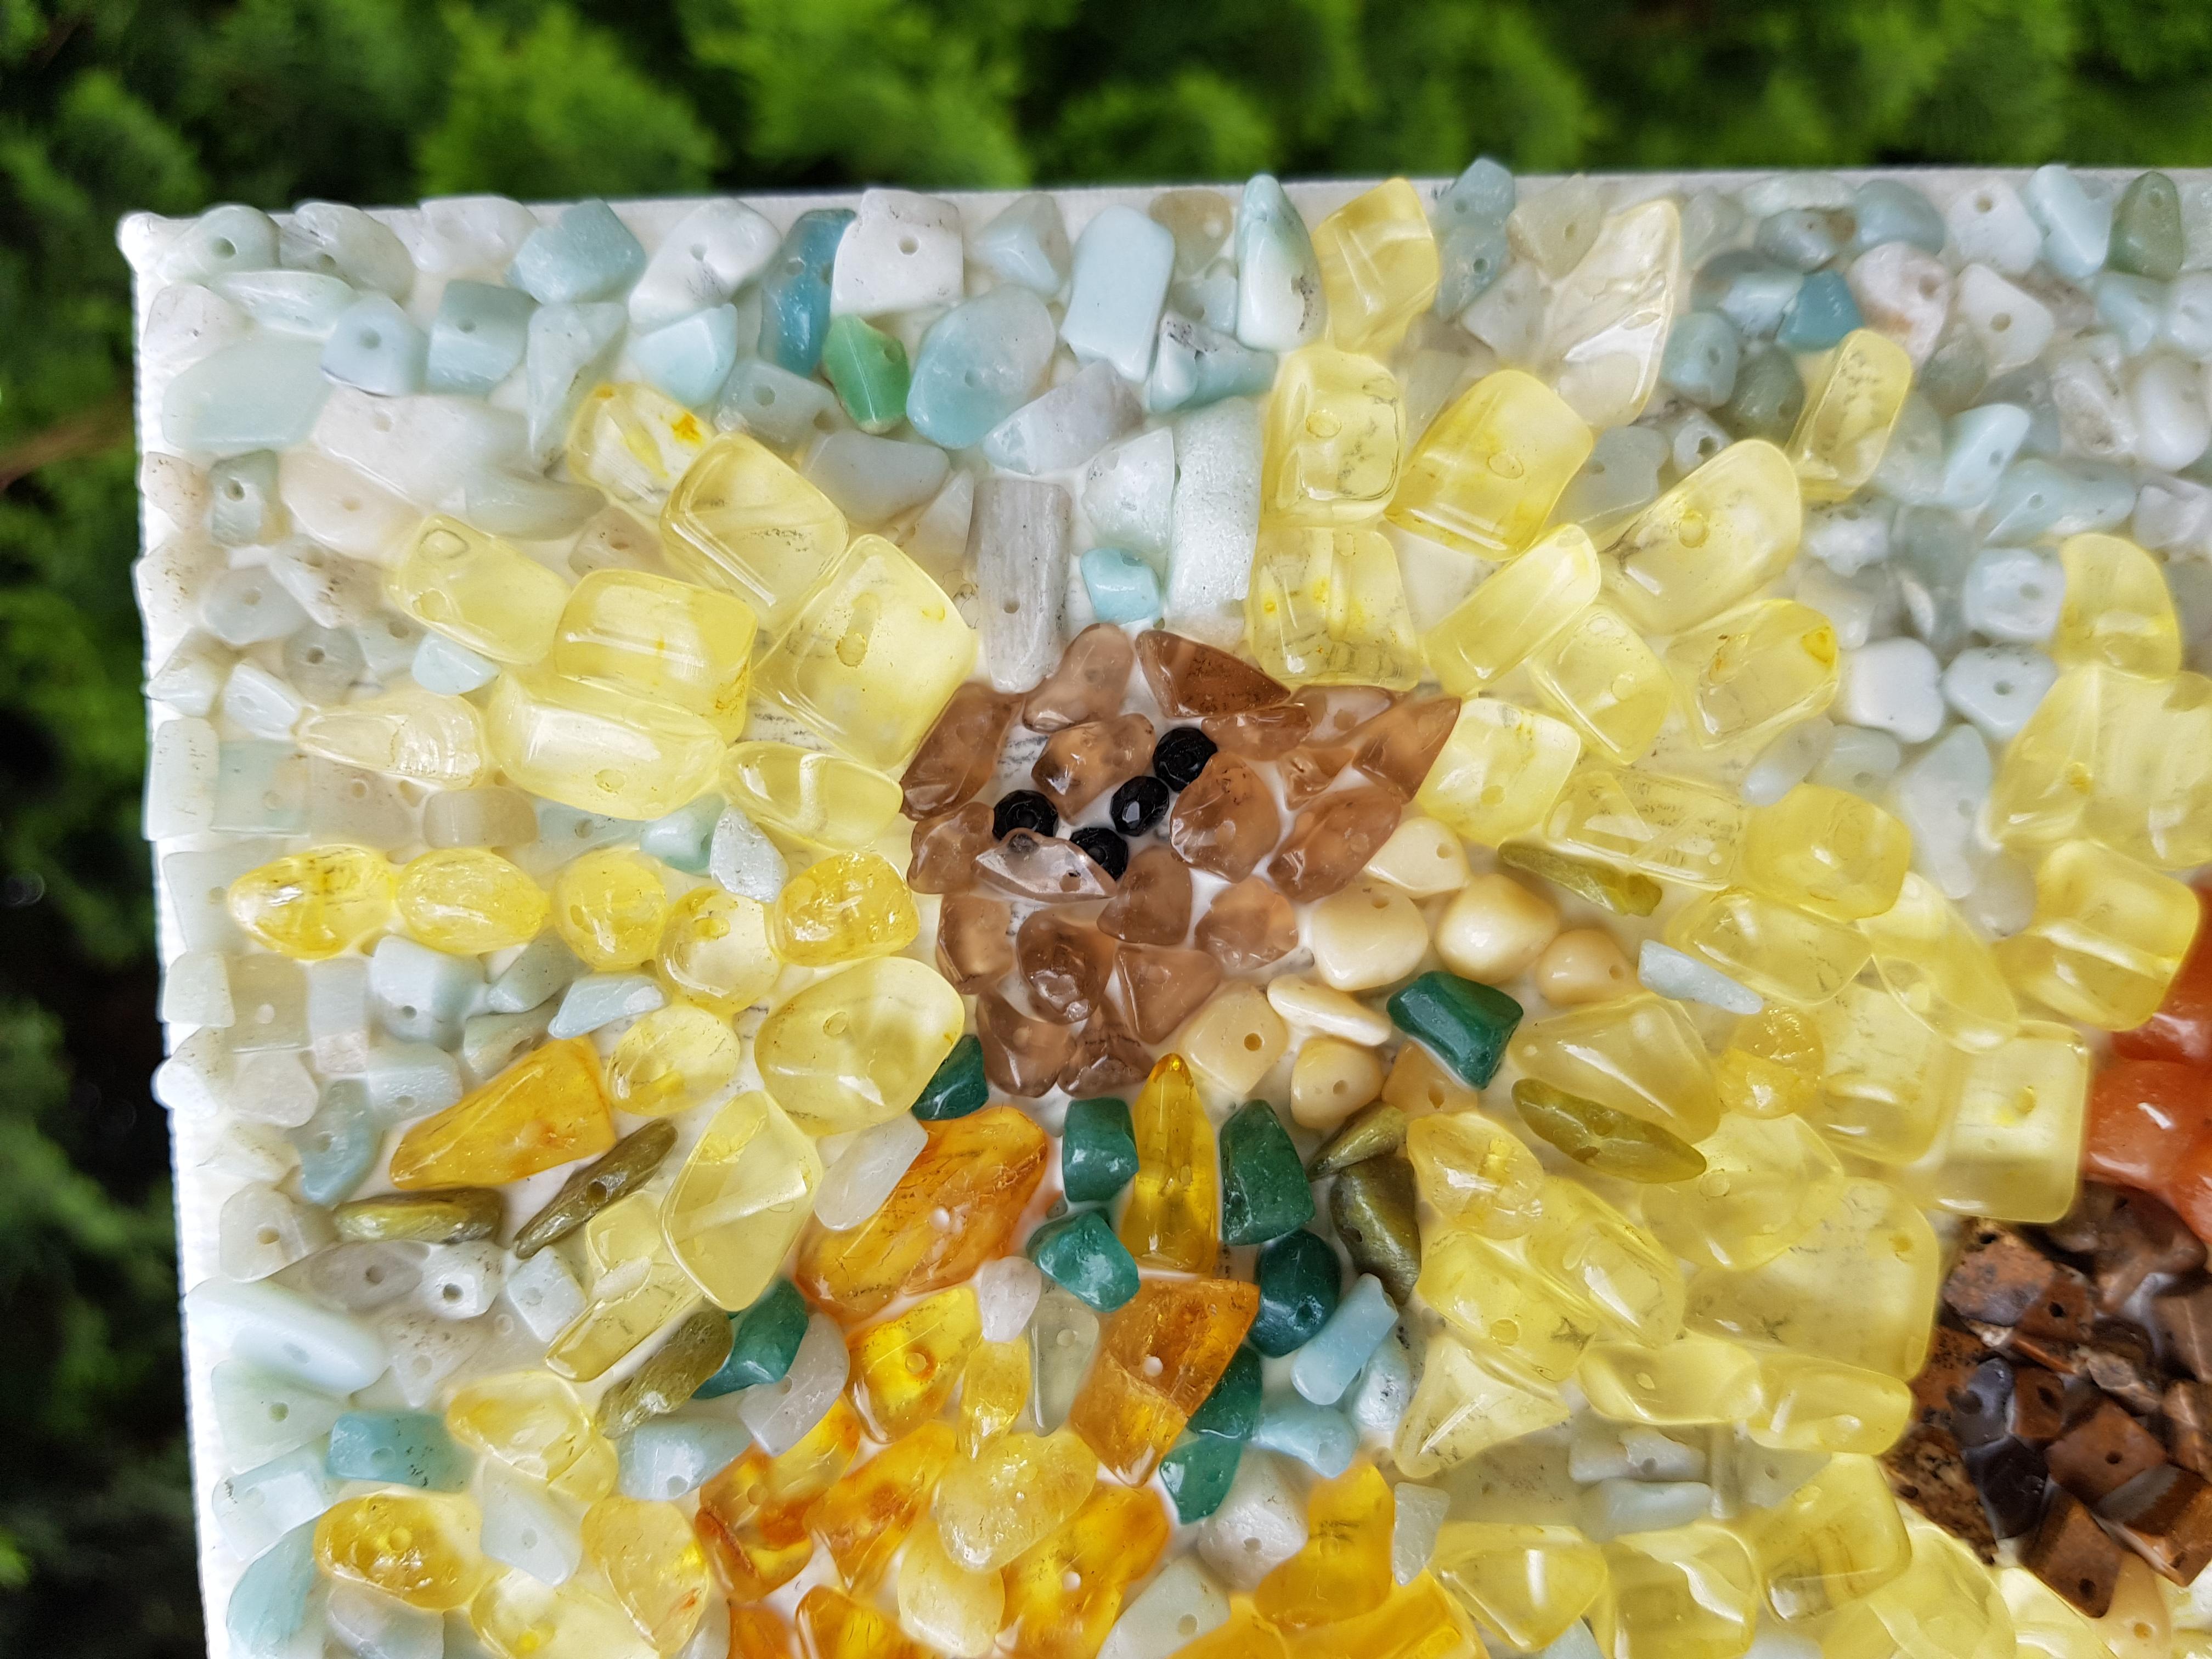 Crystal Sunflowers - In memory of Vincent Van Gogh - Modern Mixed Media Art by Joanna Breycheva